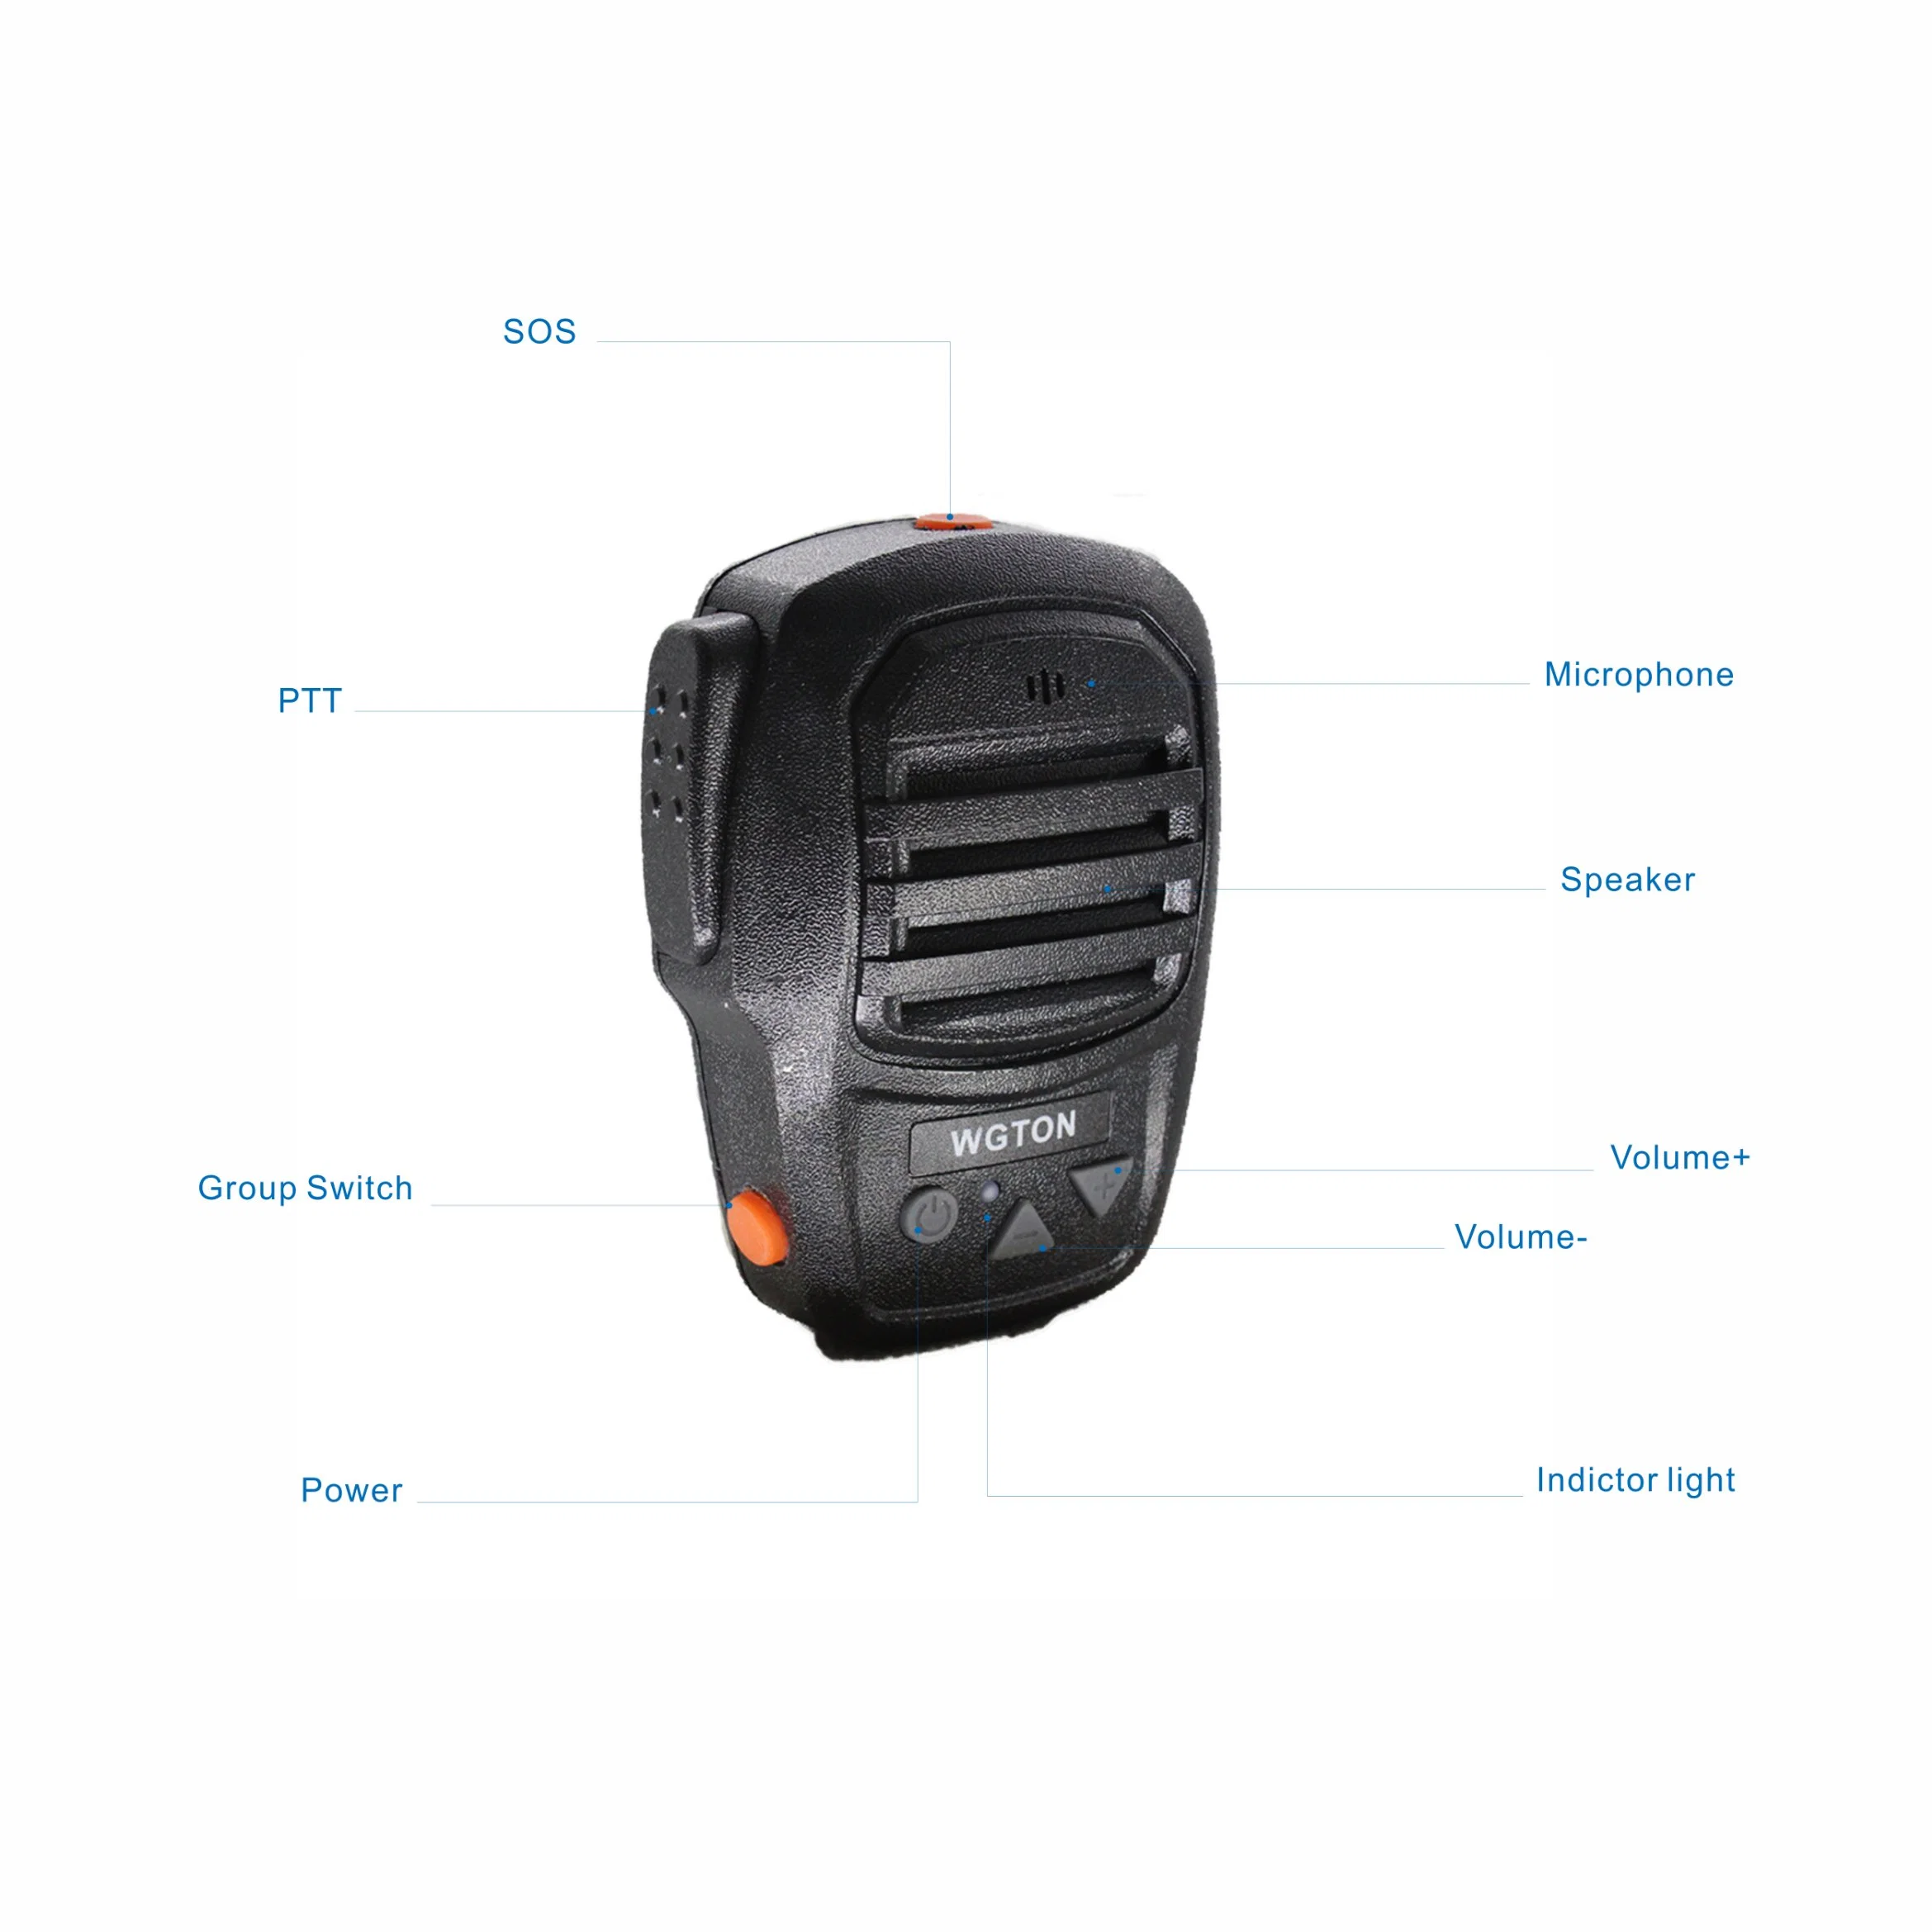 Wgton Bt150 Micrófono altavoz Bluetooth Wireless Headset hombro MICRÓFONO ALTAVOZ Auricular para 3G/4G Inteligente Poc raido